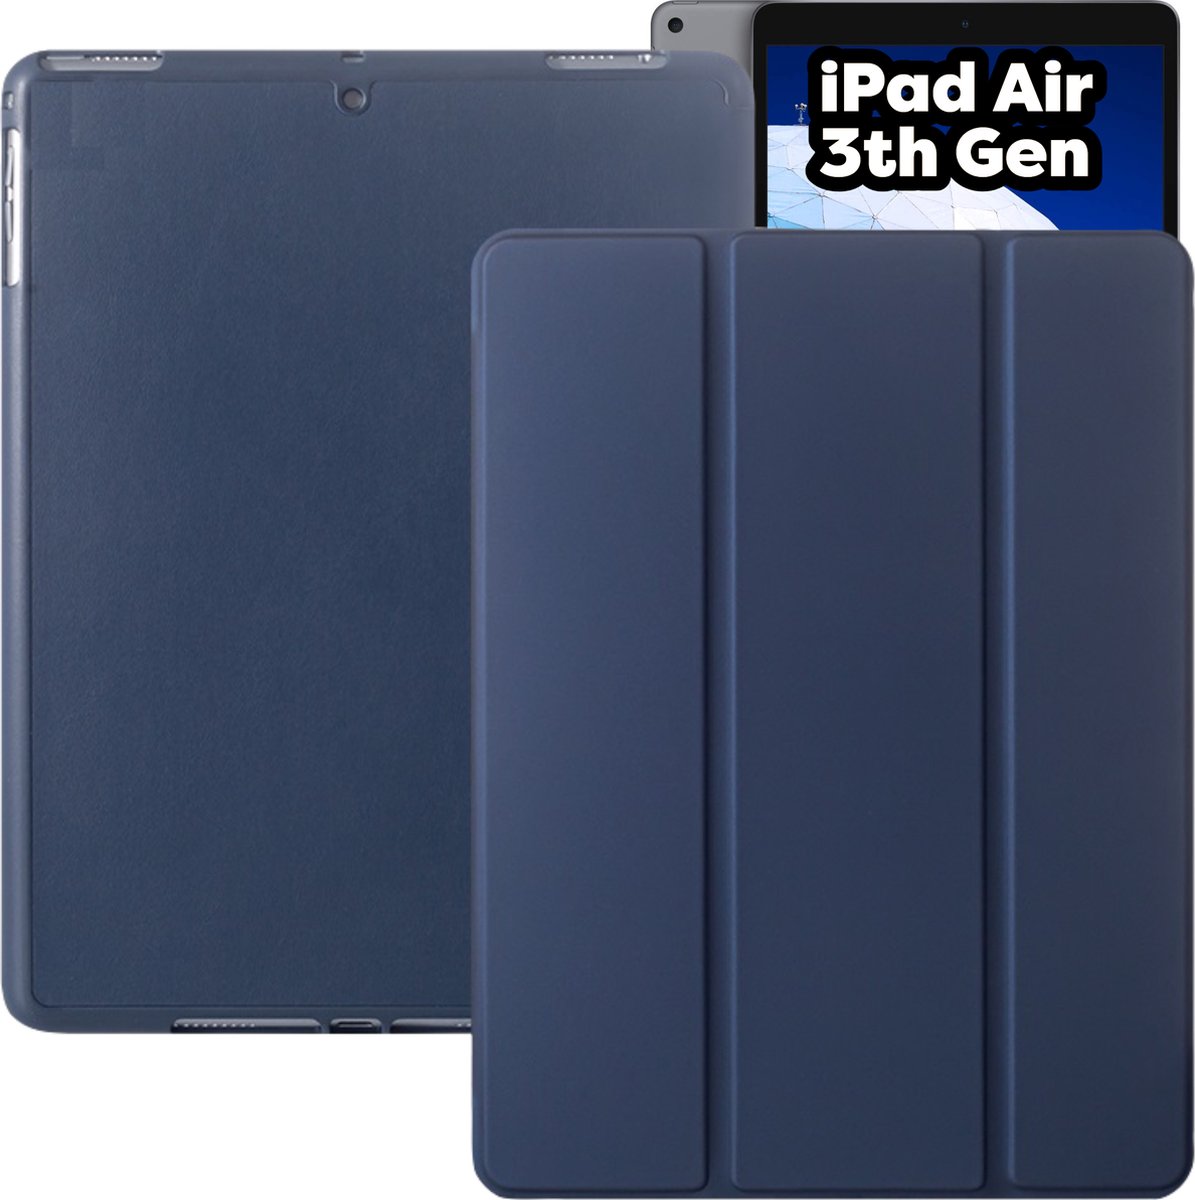 iPad Air 3 (2019) 10.5 Hoes - iPad Air 2019 (3e generatie) Case - Donker Blauw - Smart Folio iPad Air Cover met Apple Pencil Opbergvak - Hoesje voor Apple iPad Air 3e Generatie (2019) 10.5 inch